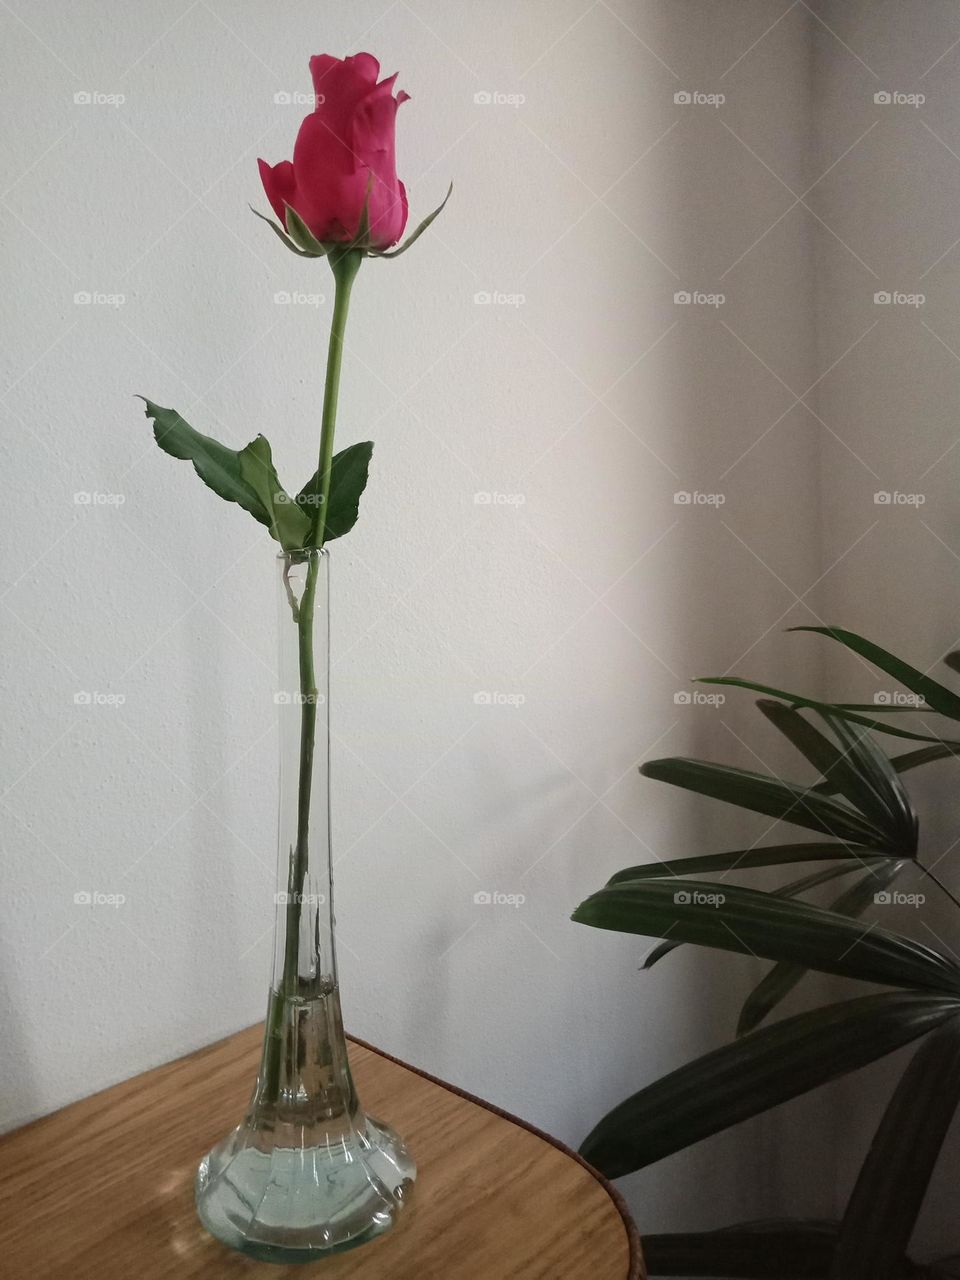 A dark pink rose in a vase